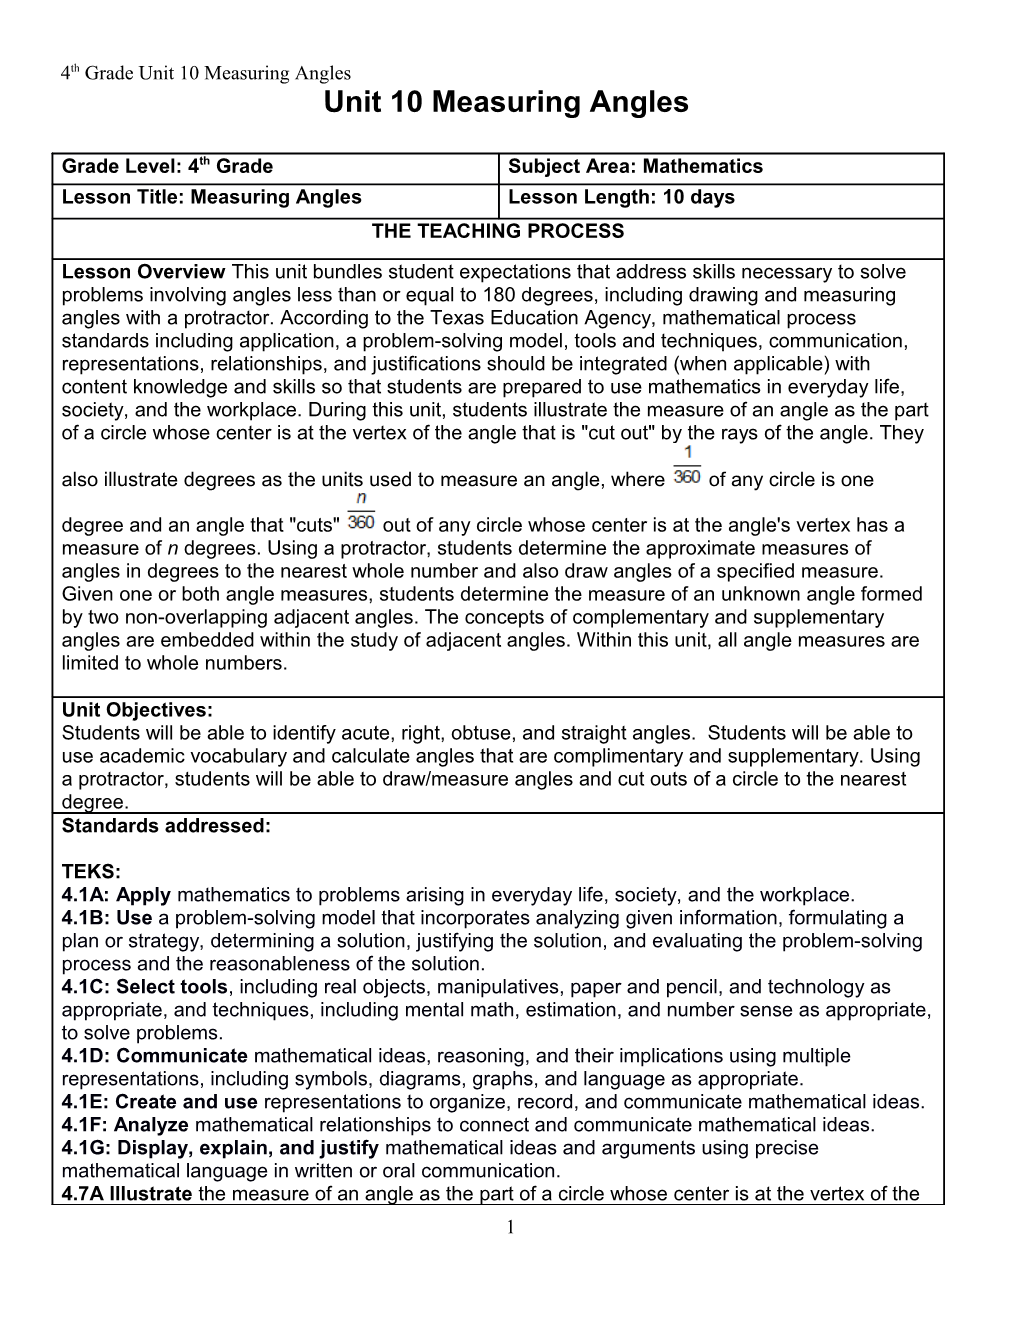 Copy of 5E Model Example Blank Document for Teachers